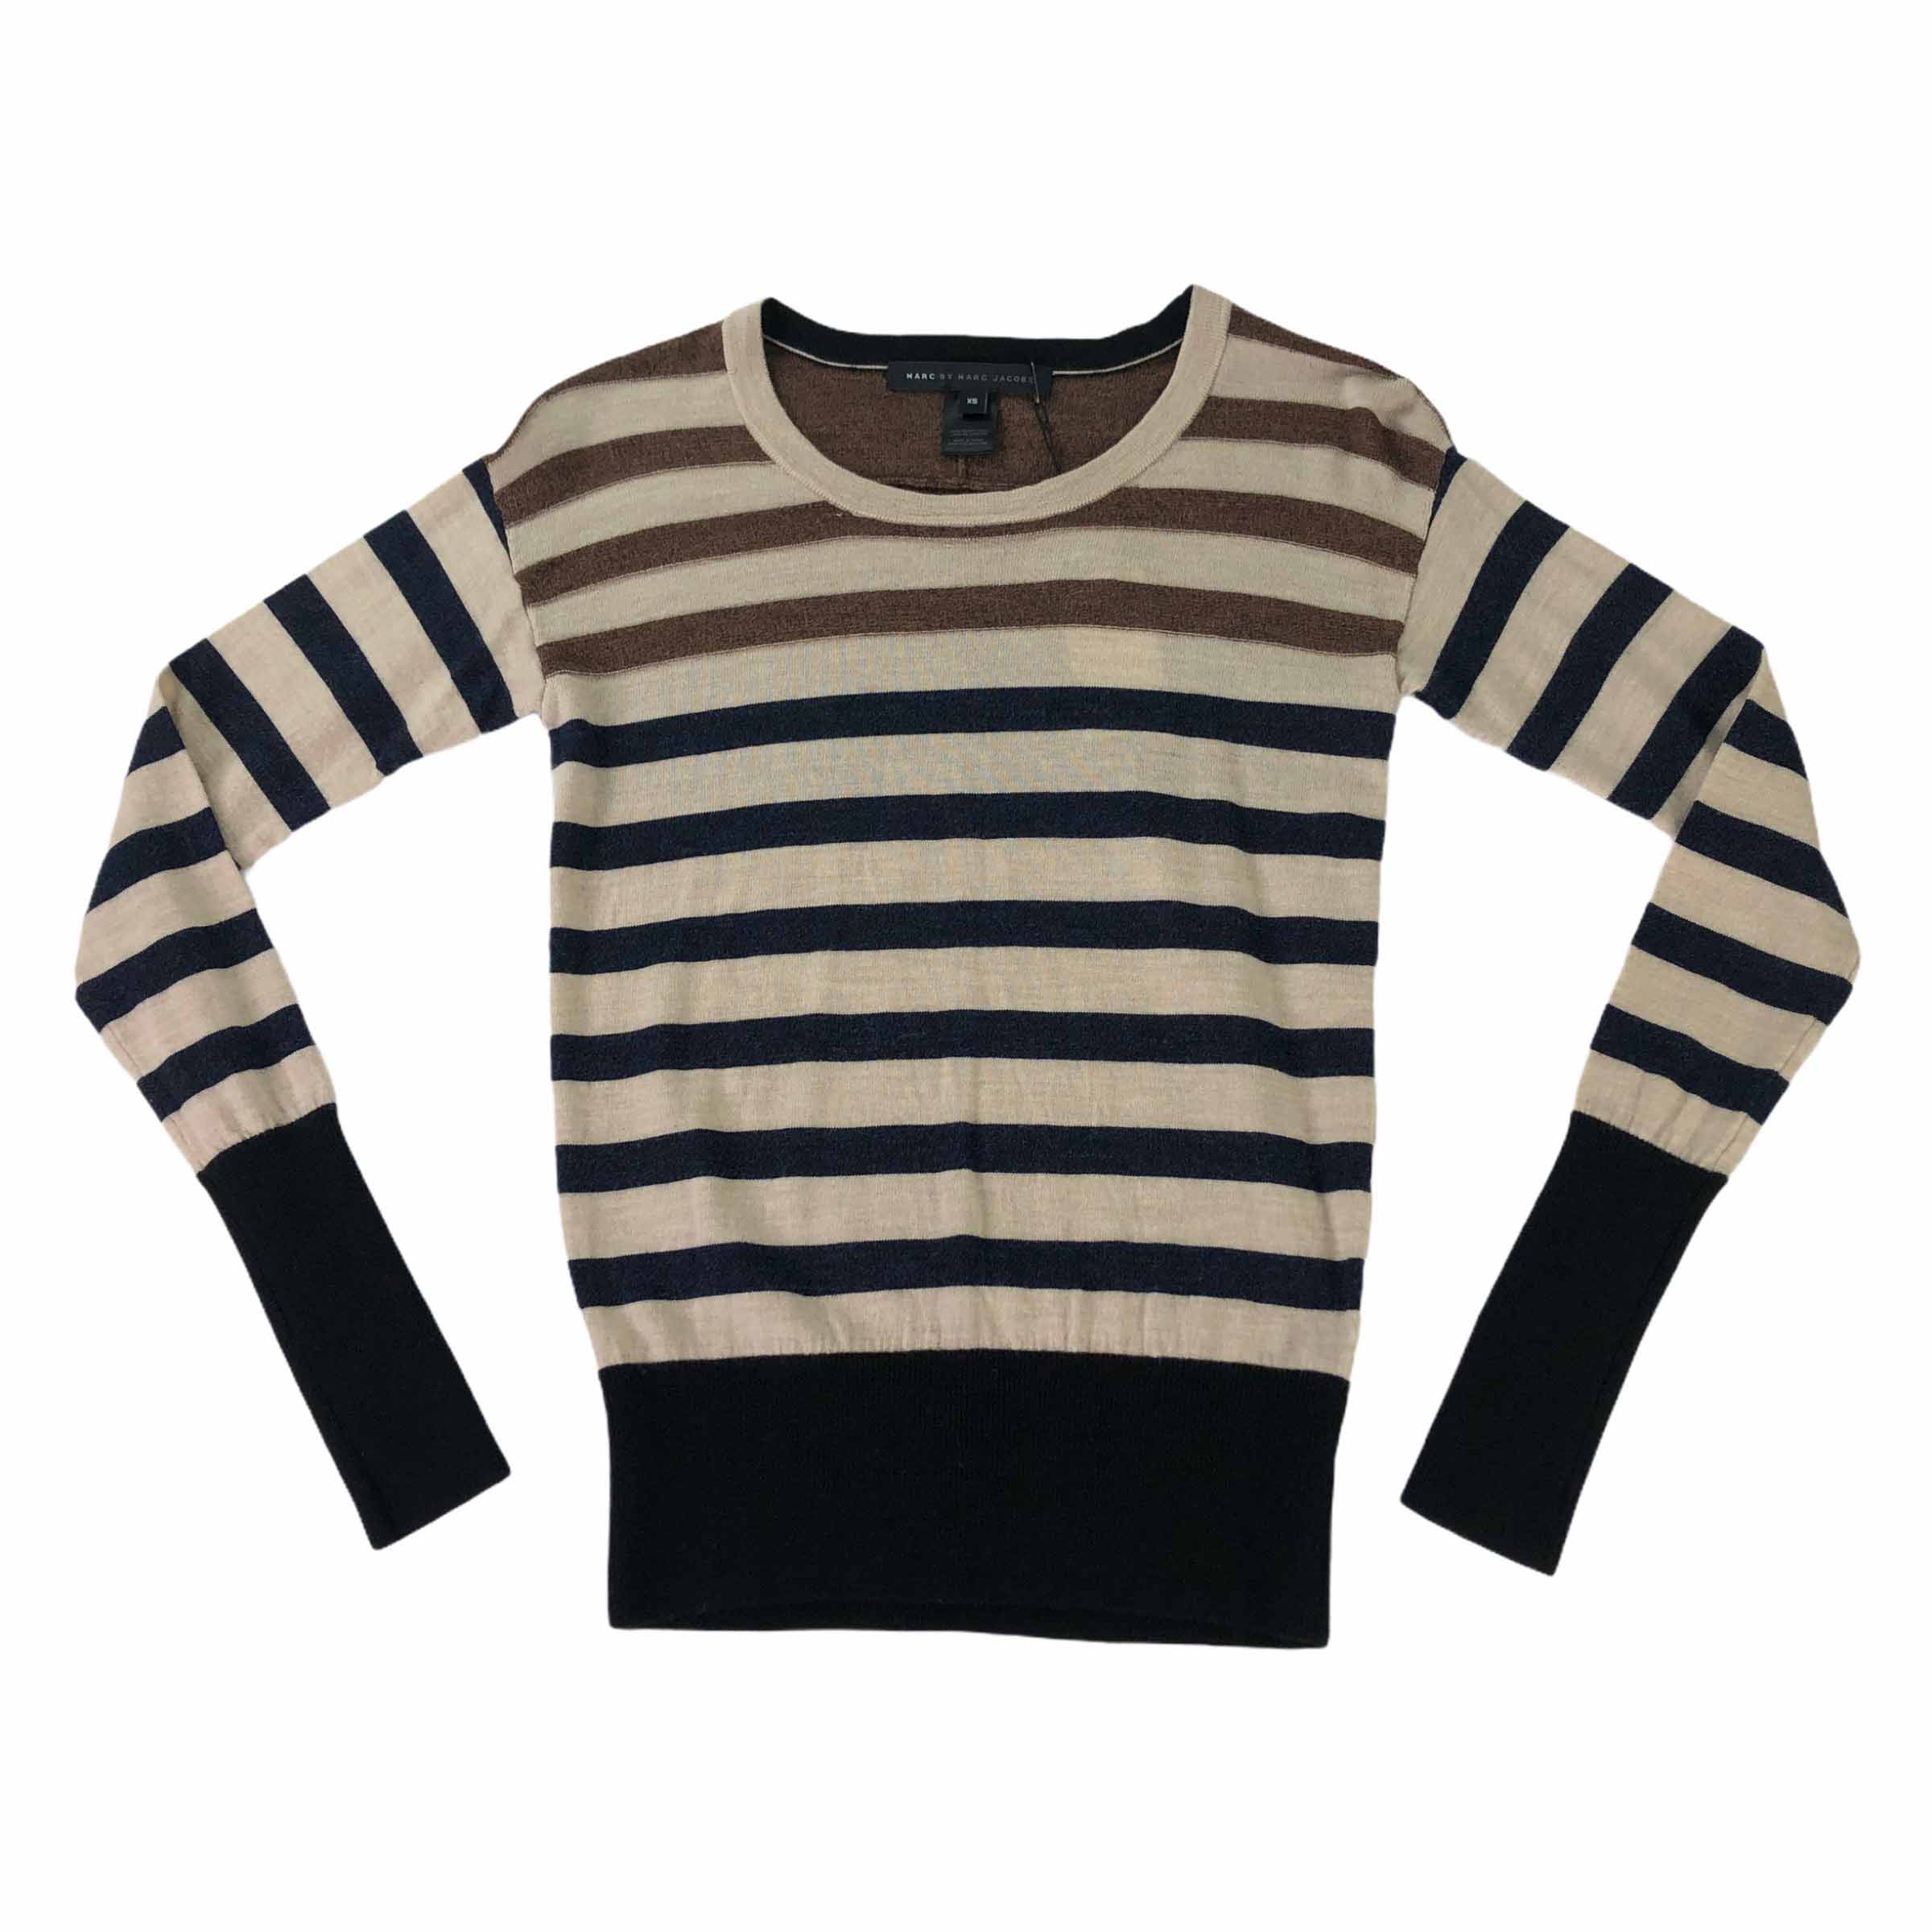 [Marc by Marc Jacobs] Stripe Knit - Size XS